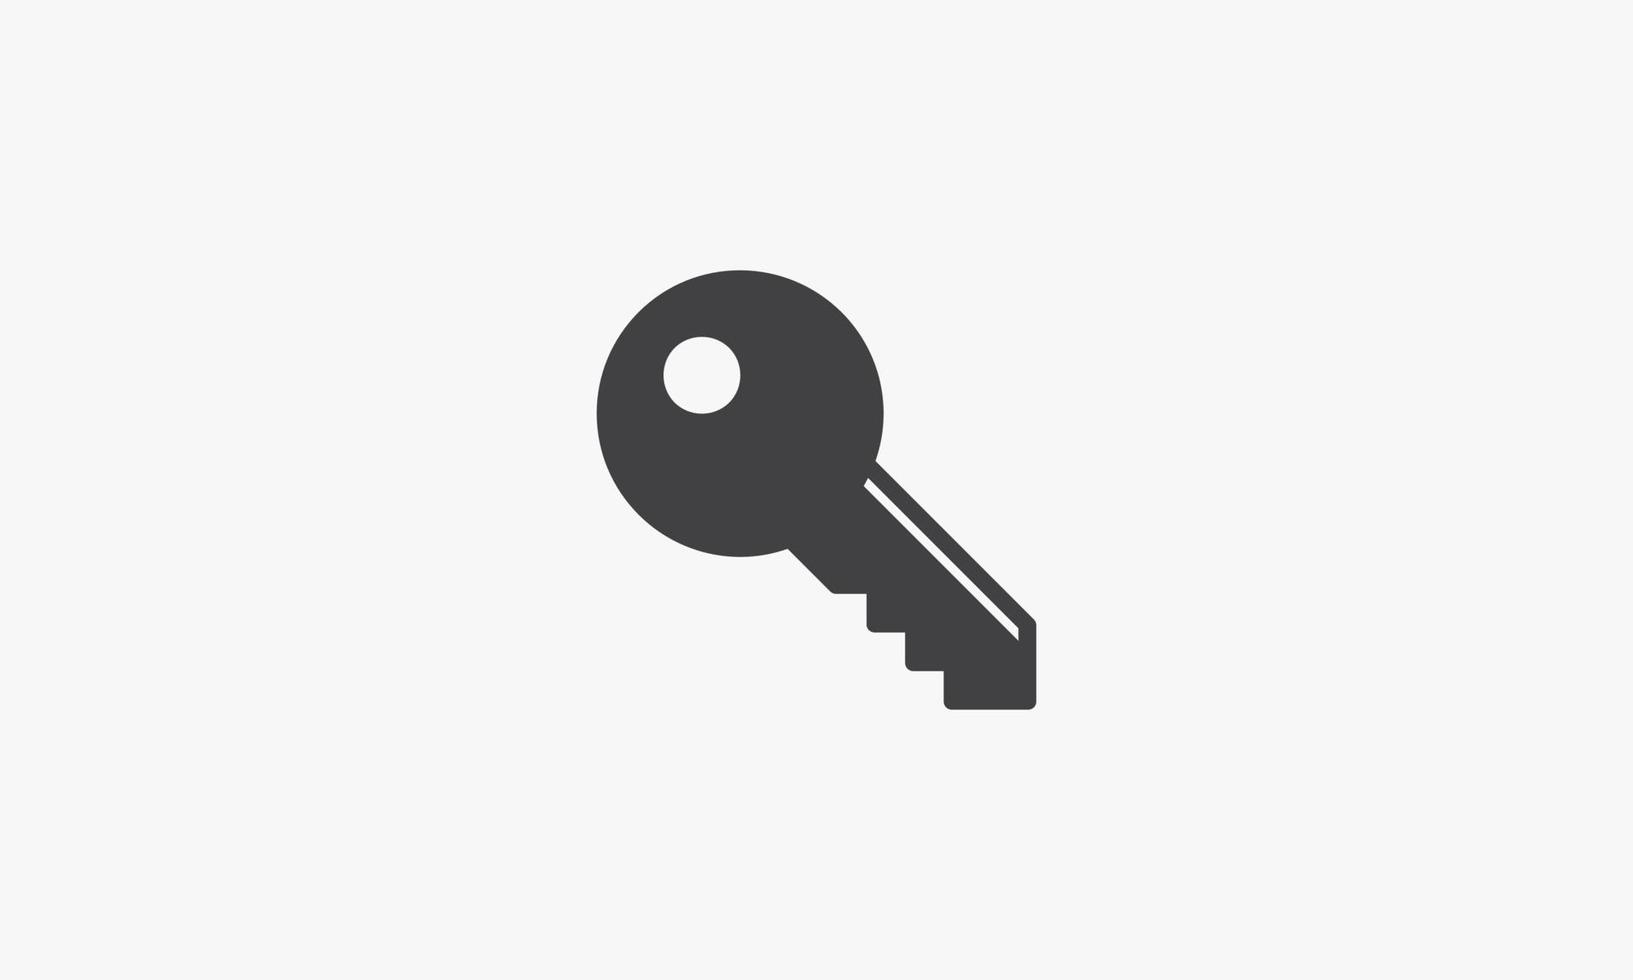 lock key vector illustration on white background. creative icon.